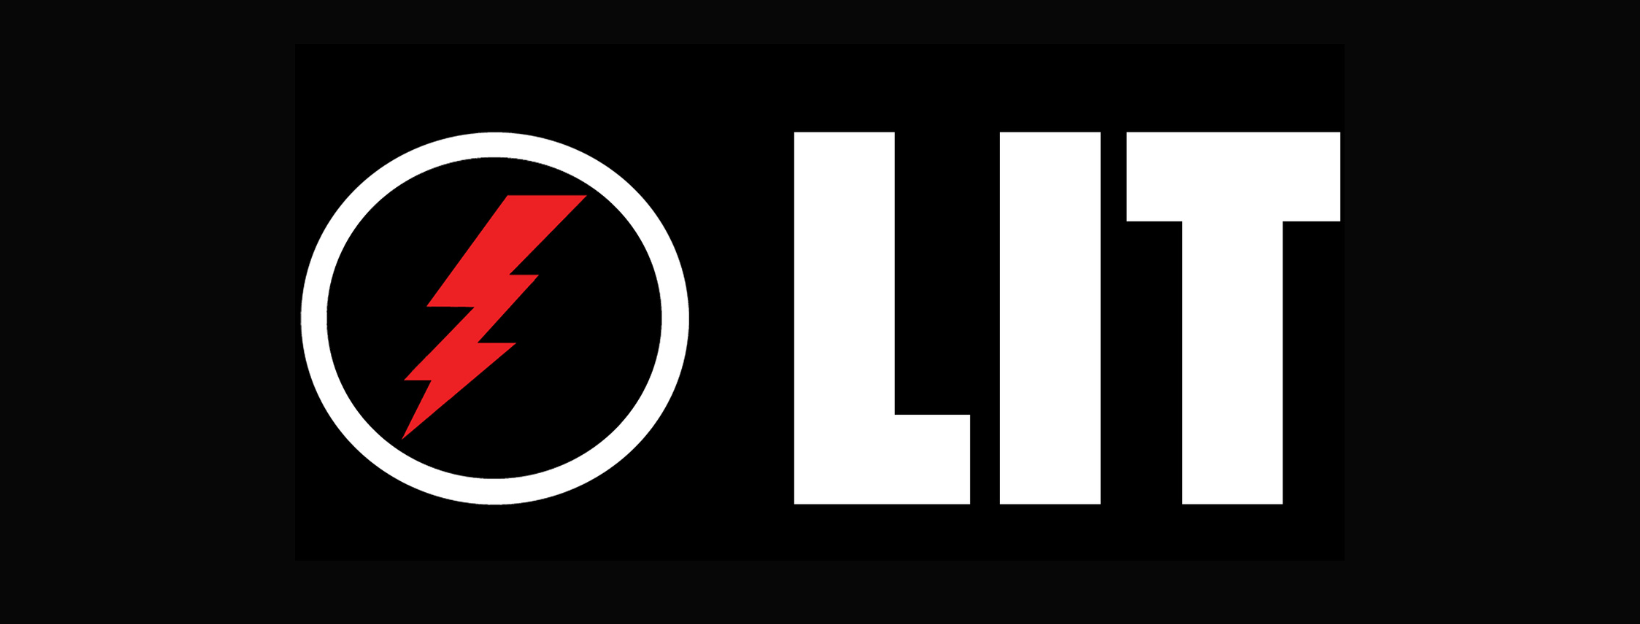 LIT Method logo